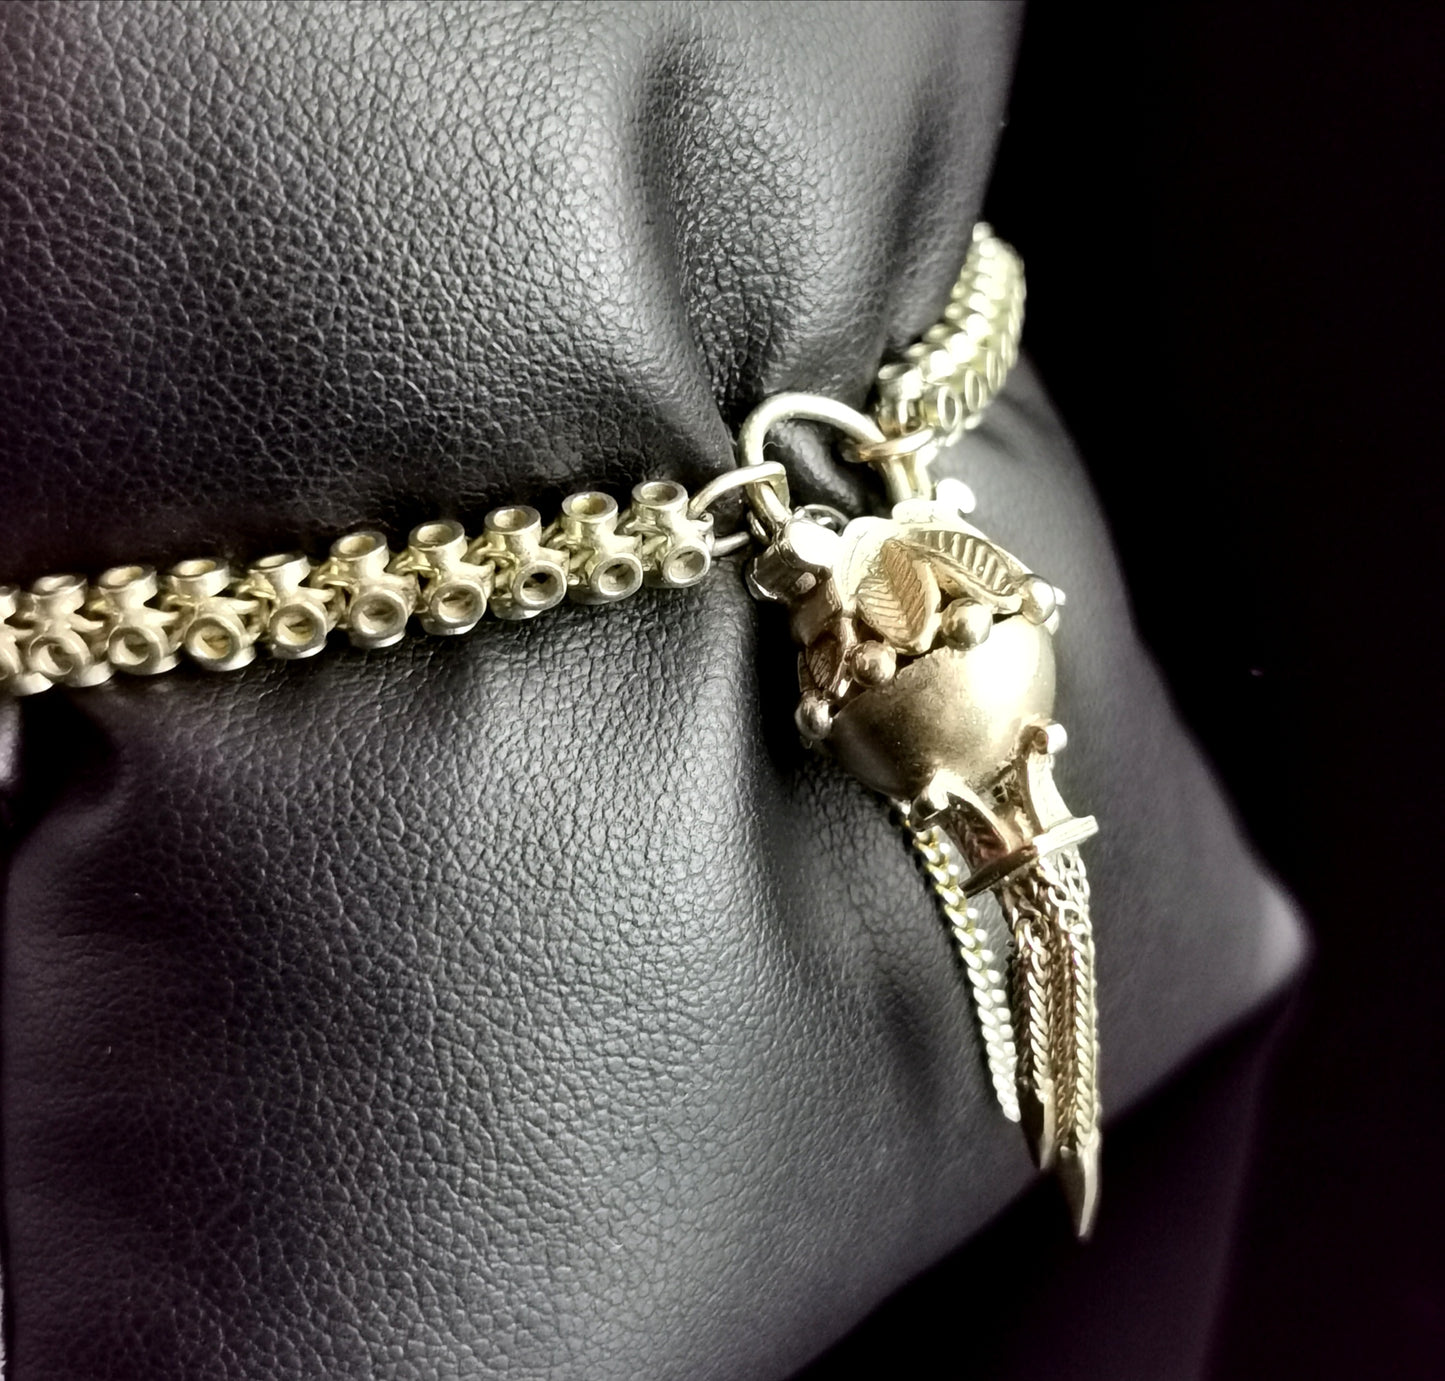 Antique 9ct gold fancy link bracelet, tassle padlock clasp